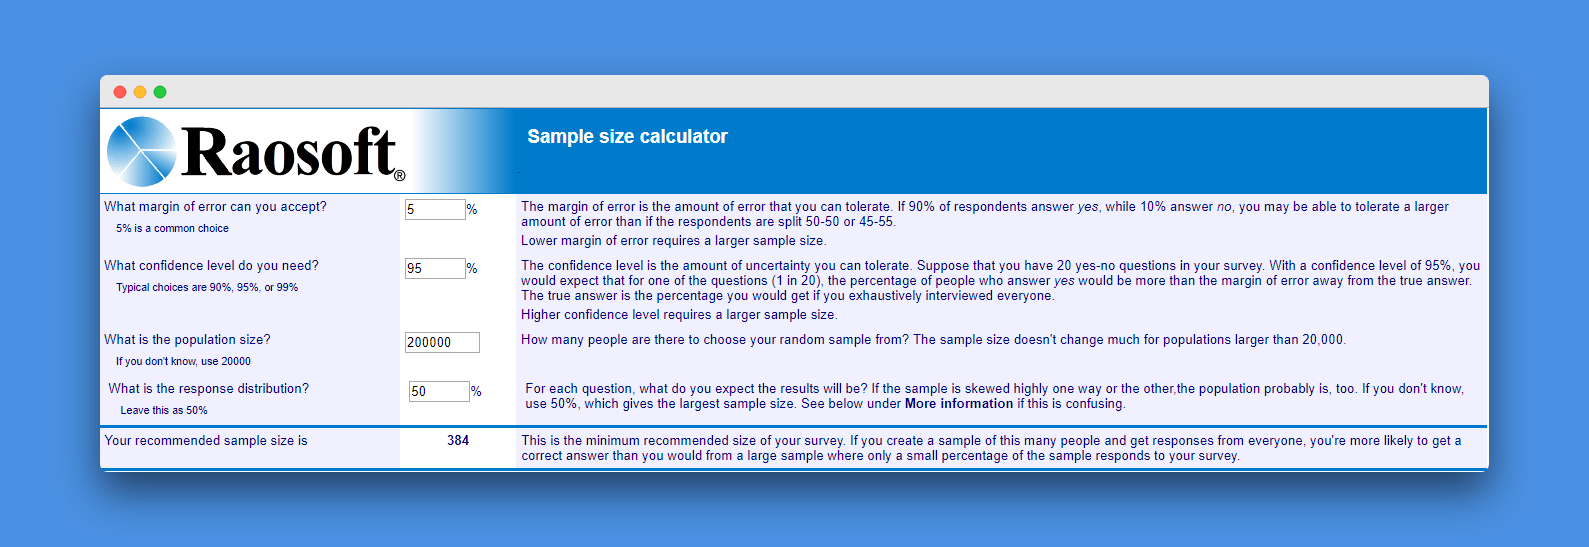 Sample size calculator by Raosoft